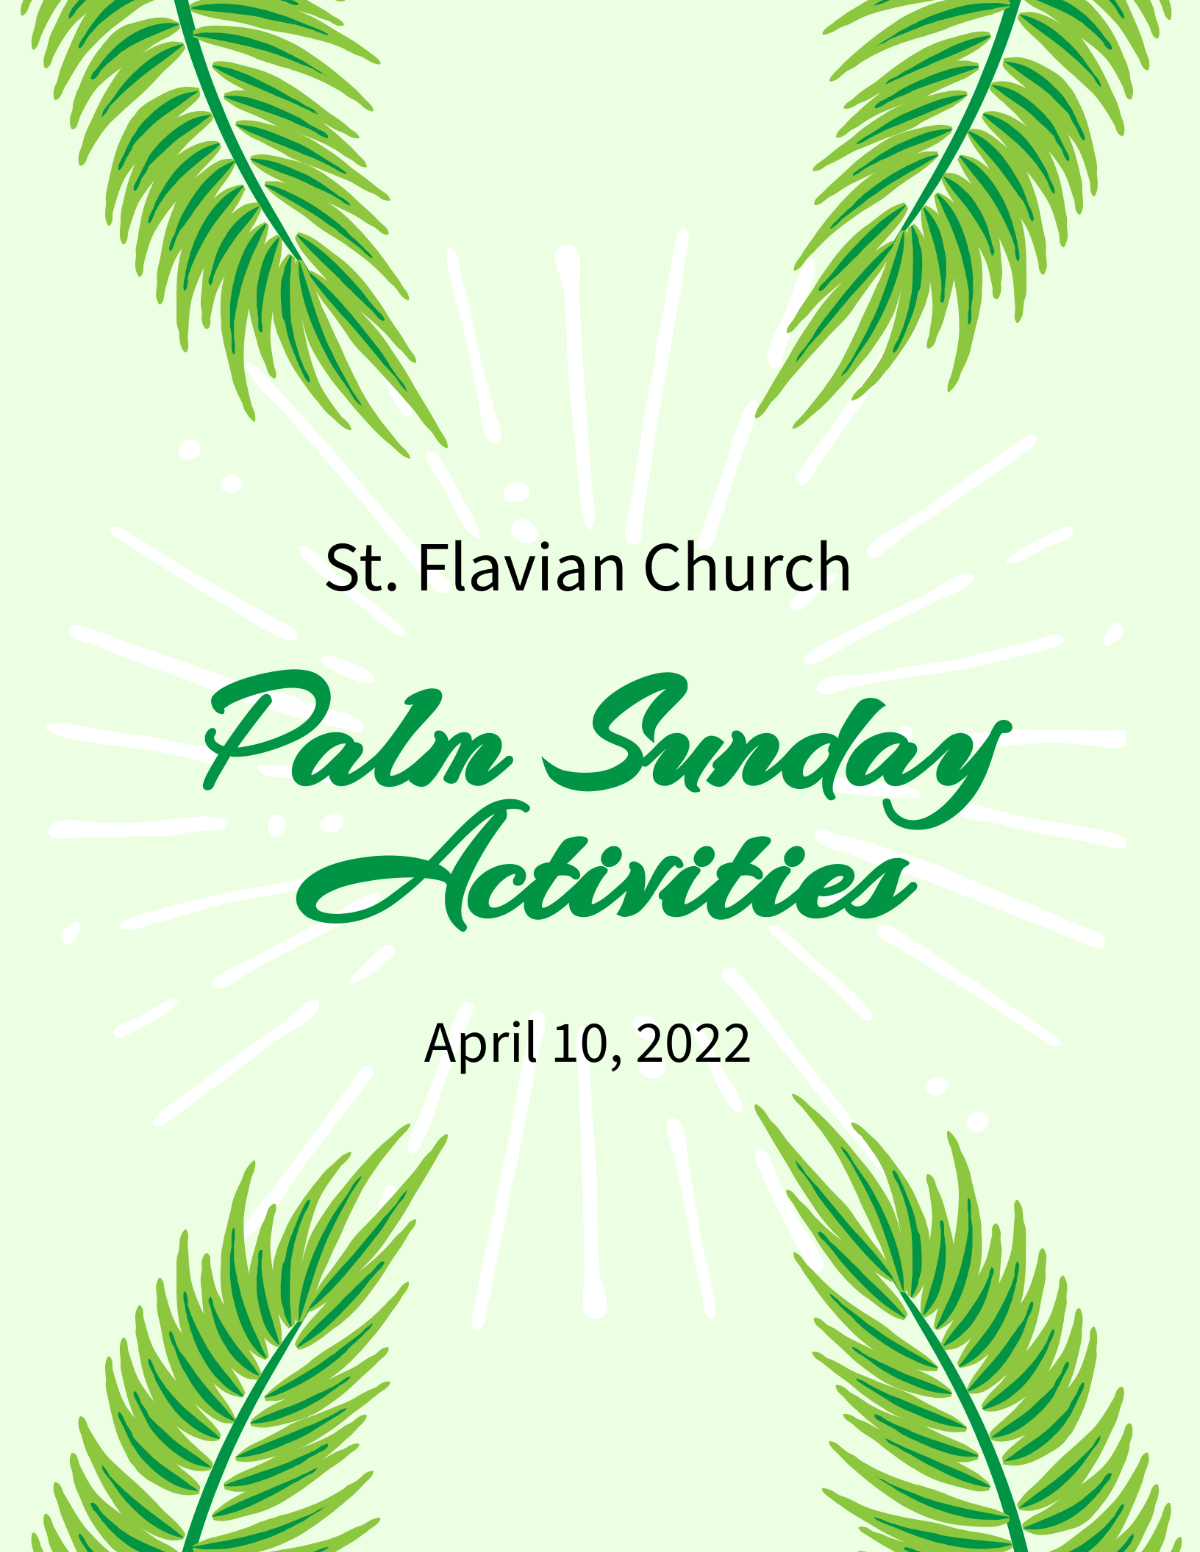 PalmSunday Event Flyer Template